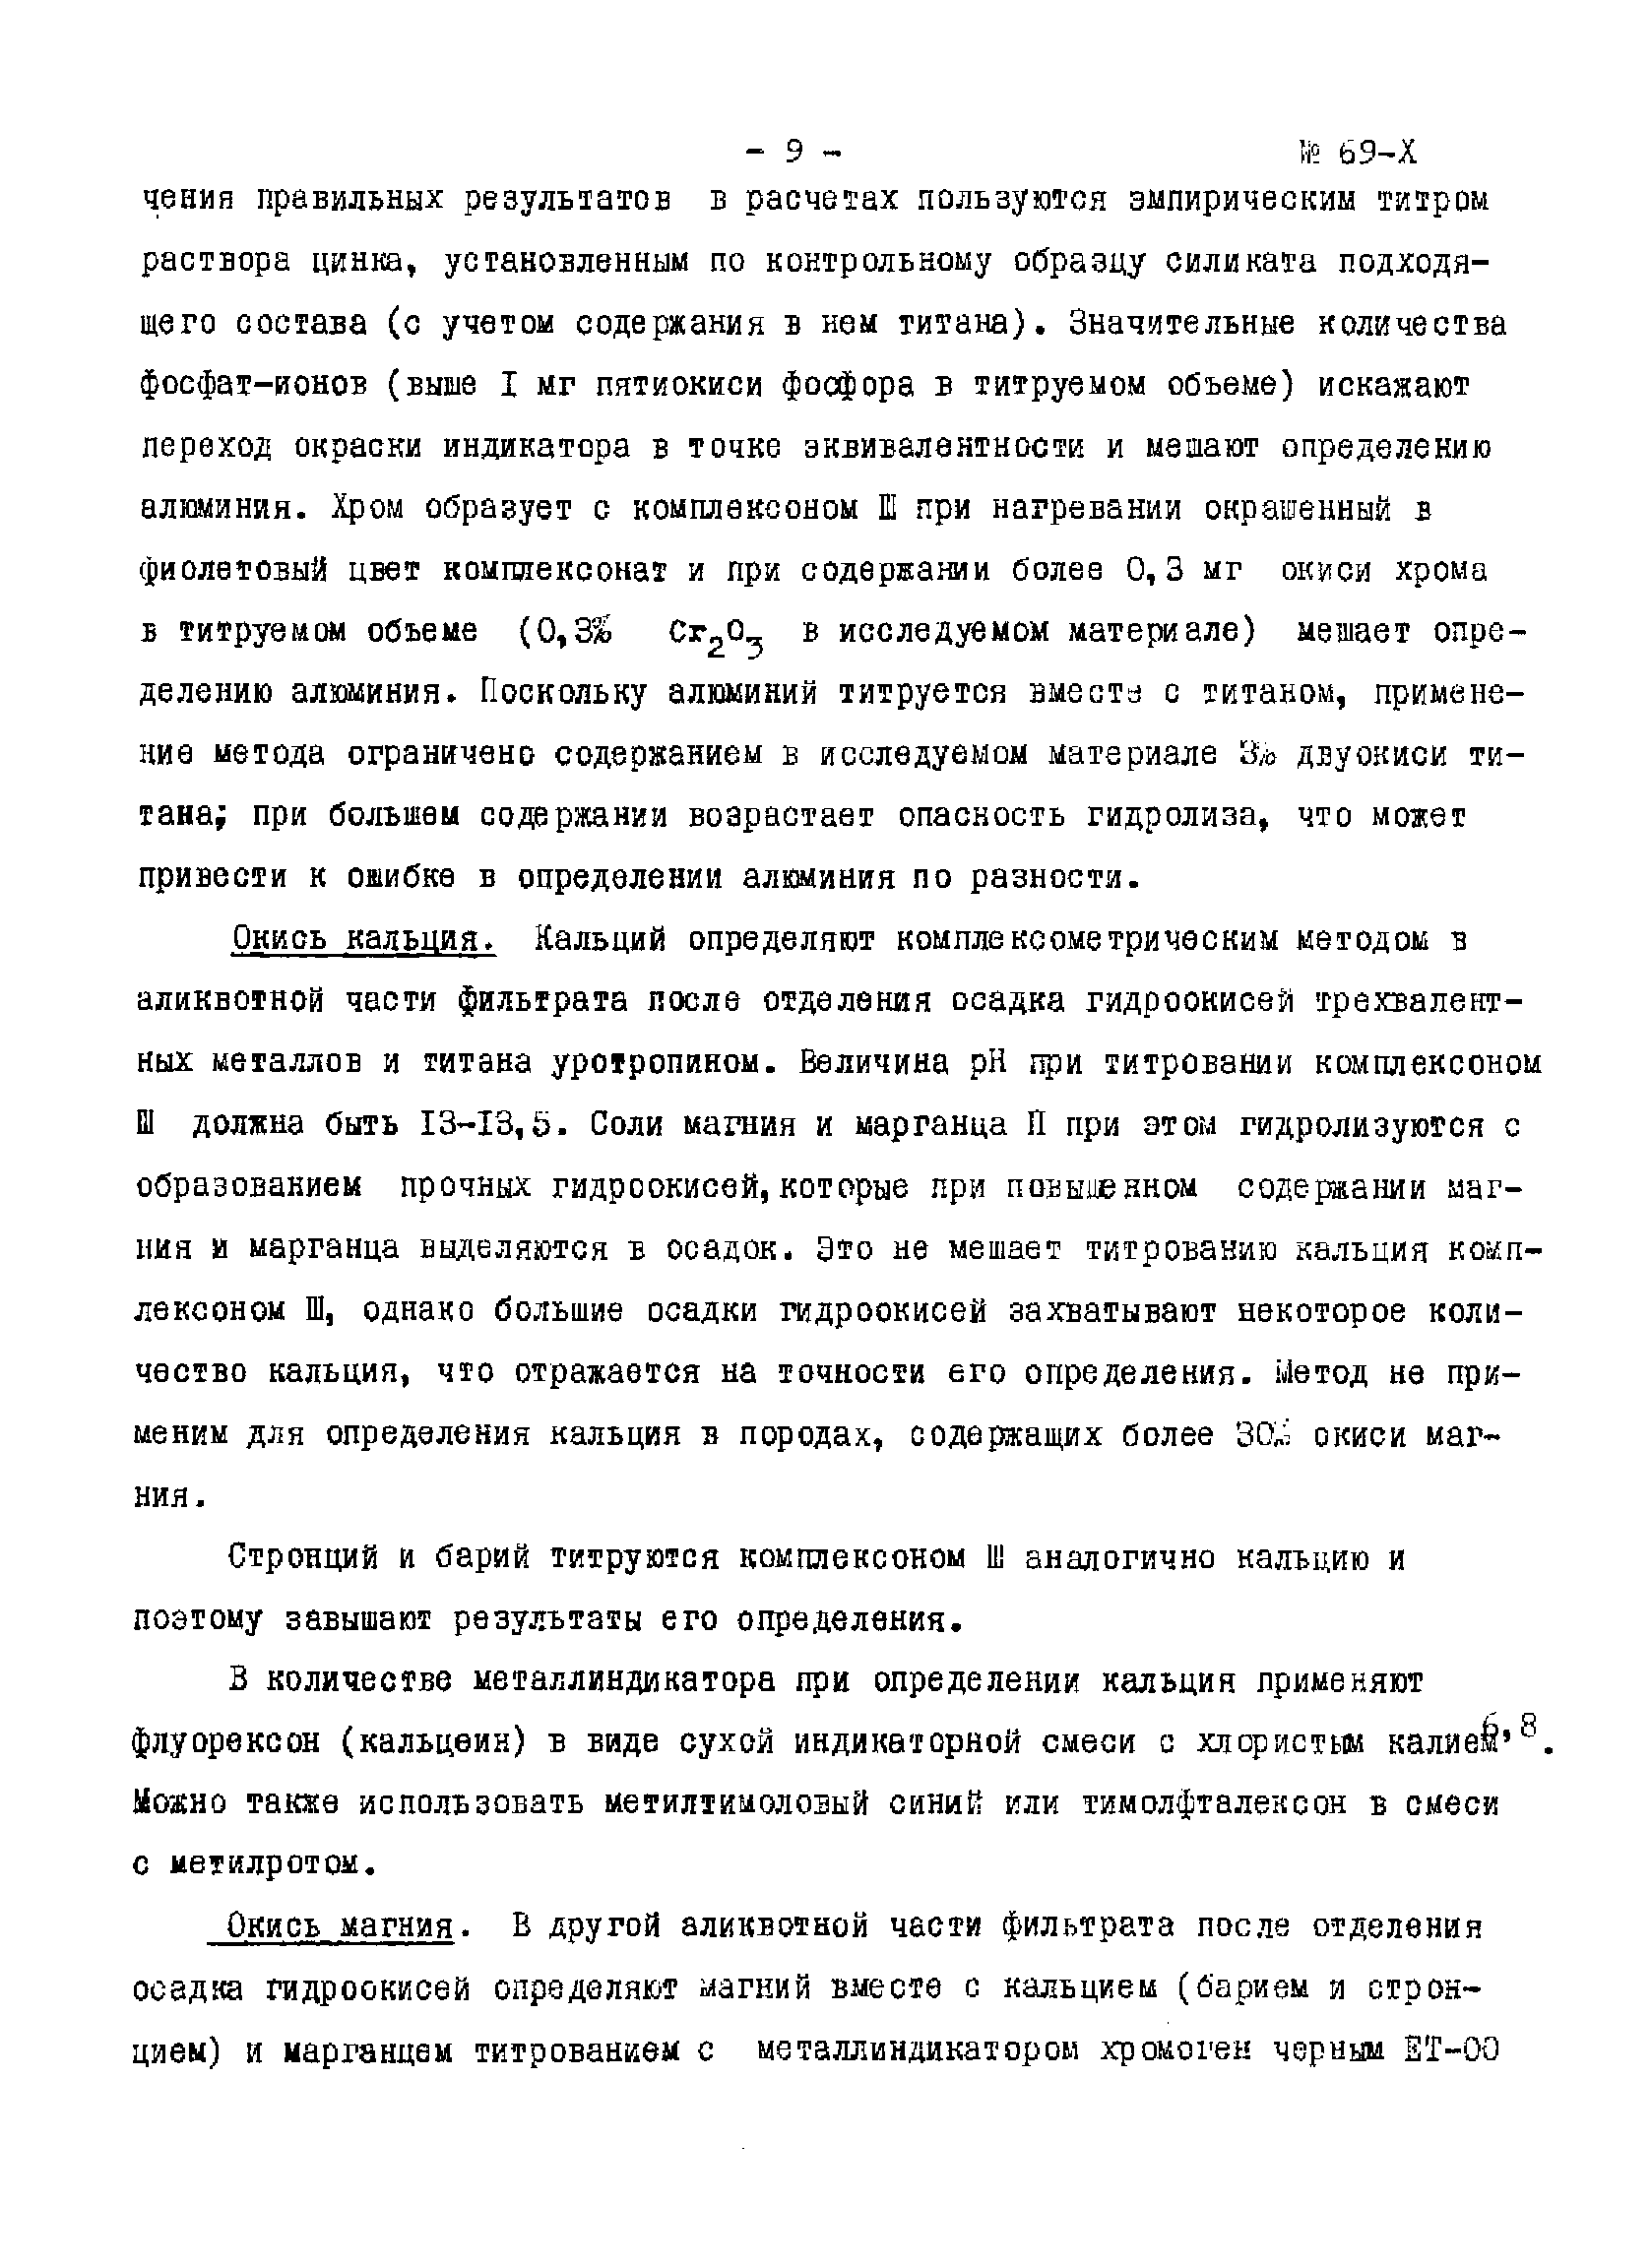 Инструкция НСАМ 69-Х